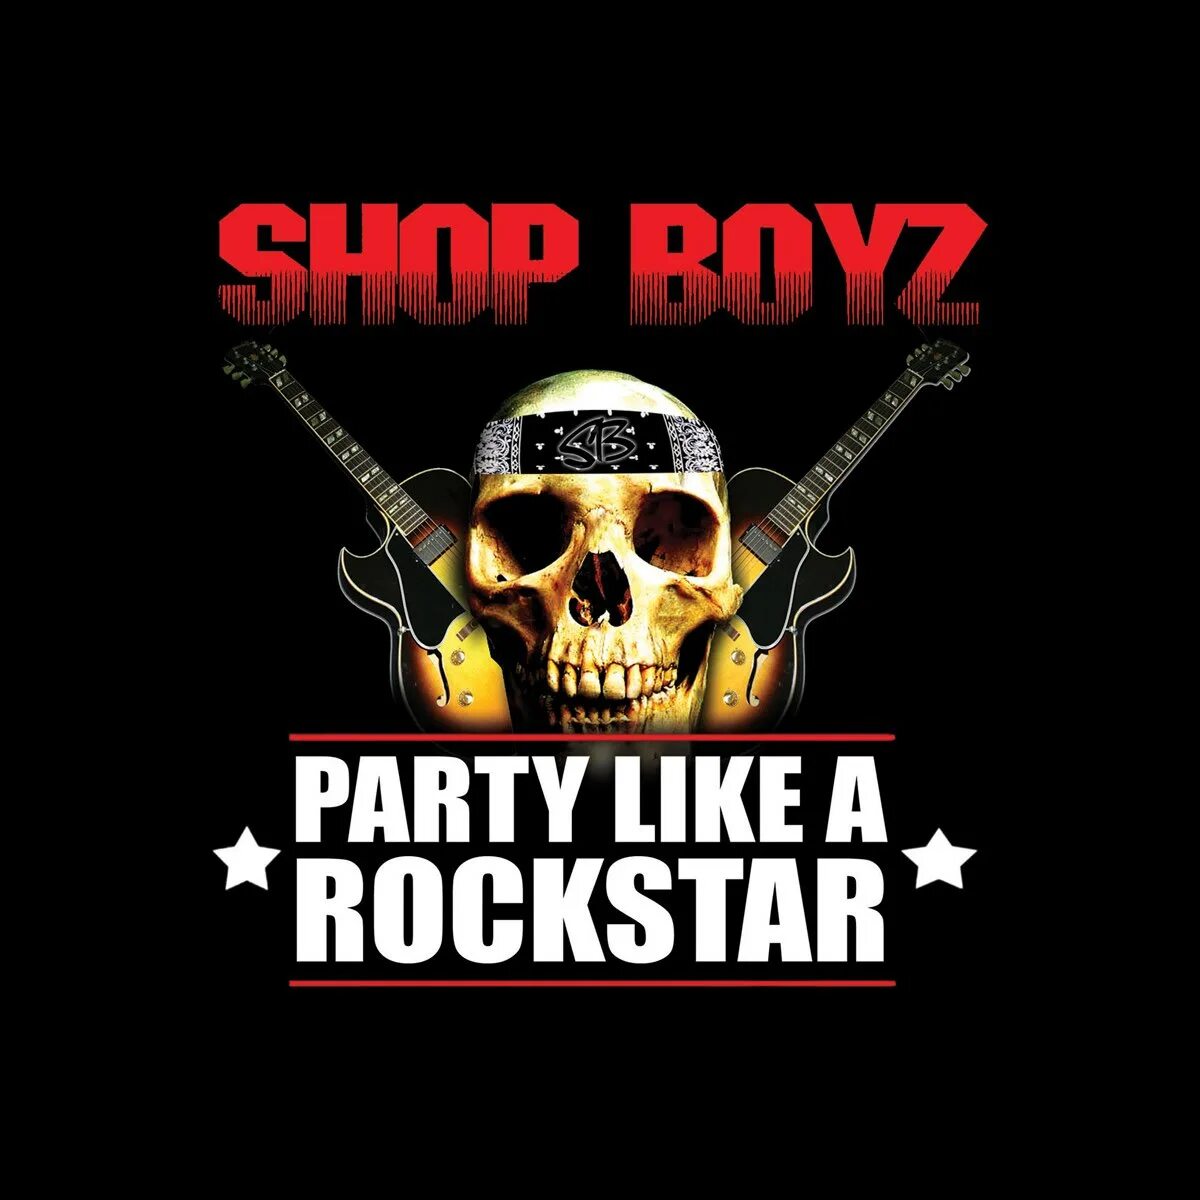 So i party like a rock star. Shop Boyz Party like a Rockstar. Party like a Rockstar. Shop boys - Rockstar Mentality. Вайт панк рокстар обложка.